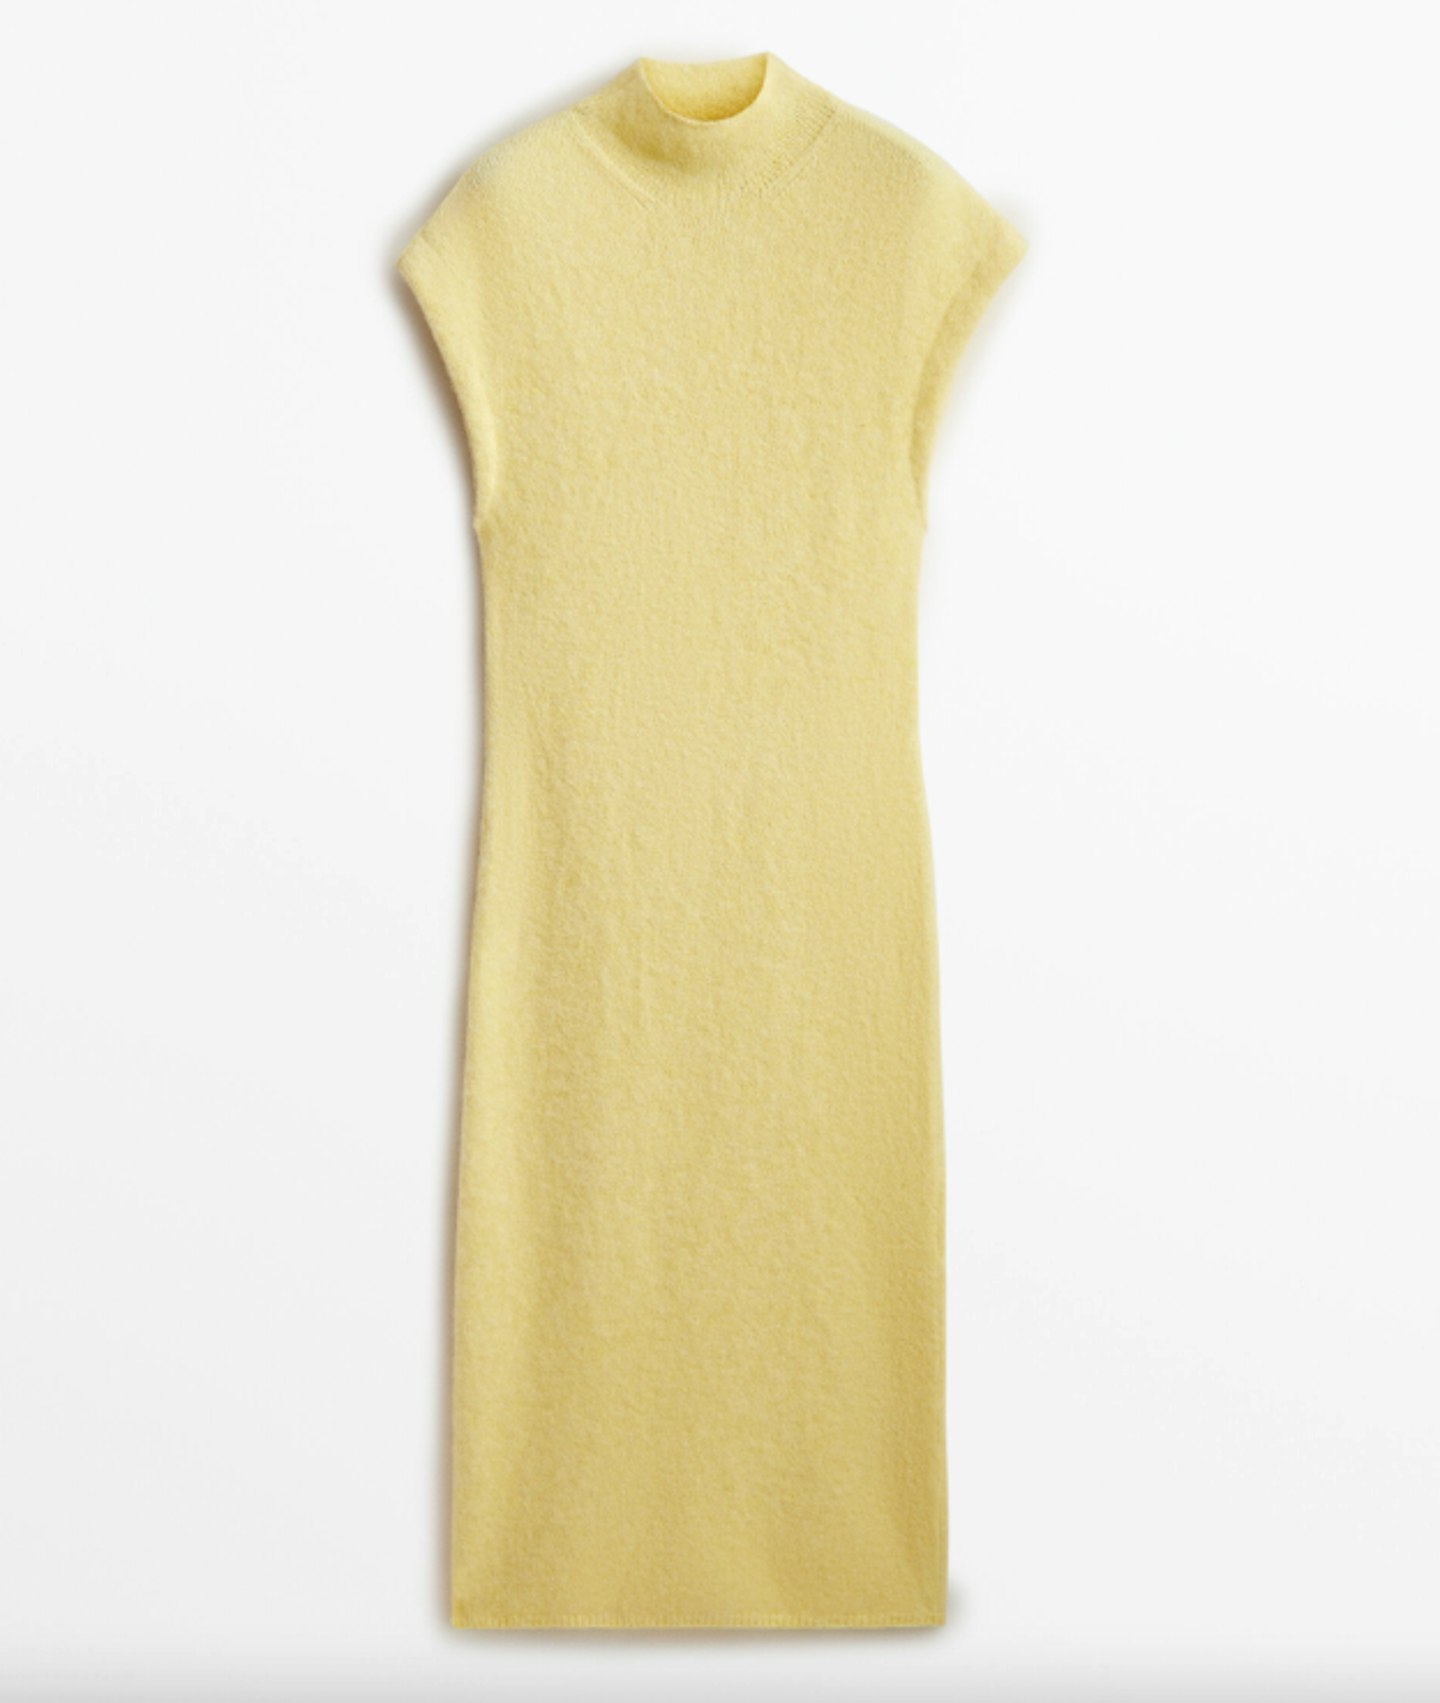 Massimo Dutti, Knit Short-Sleeve Dress